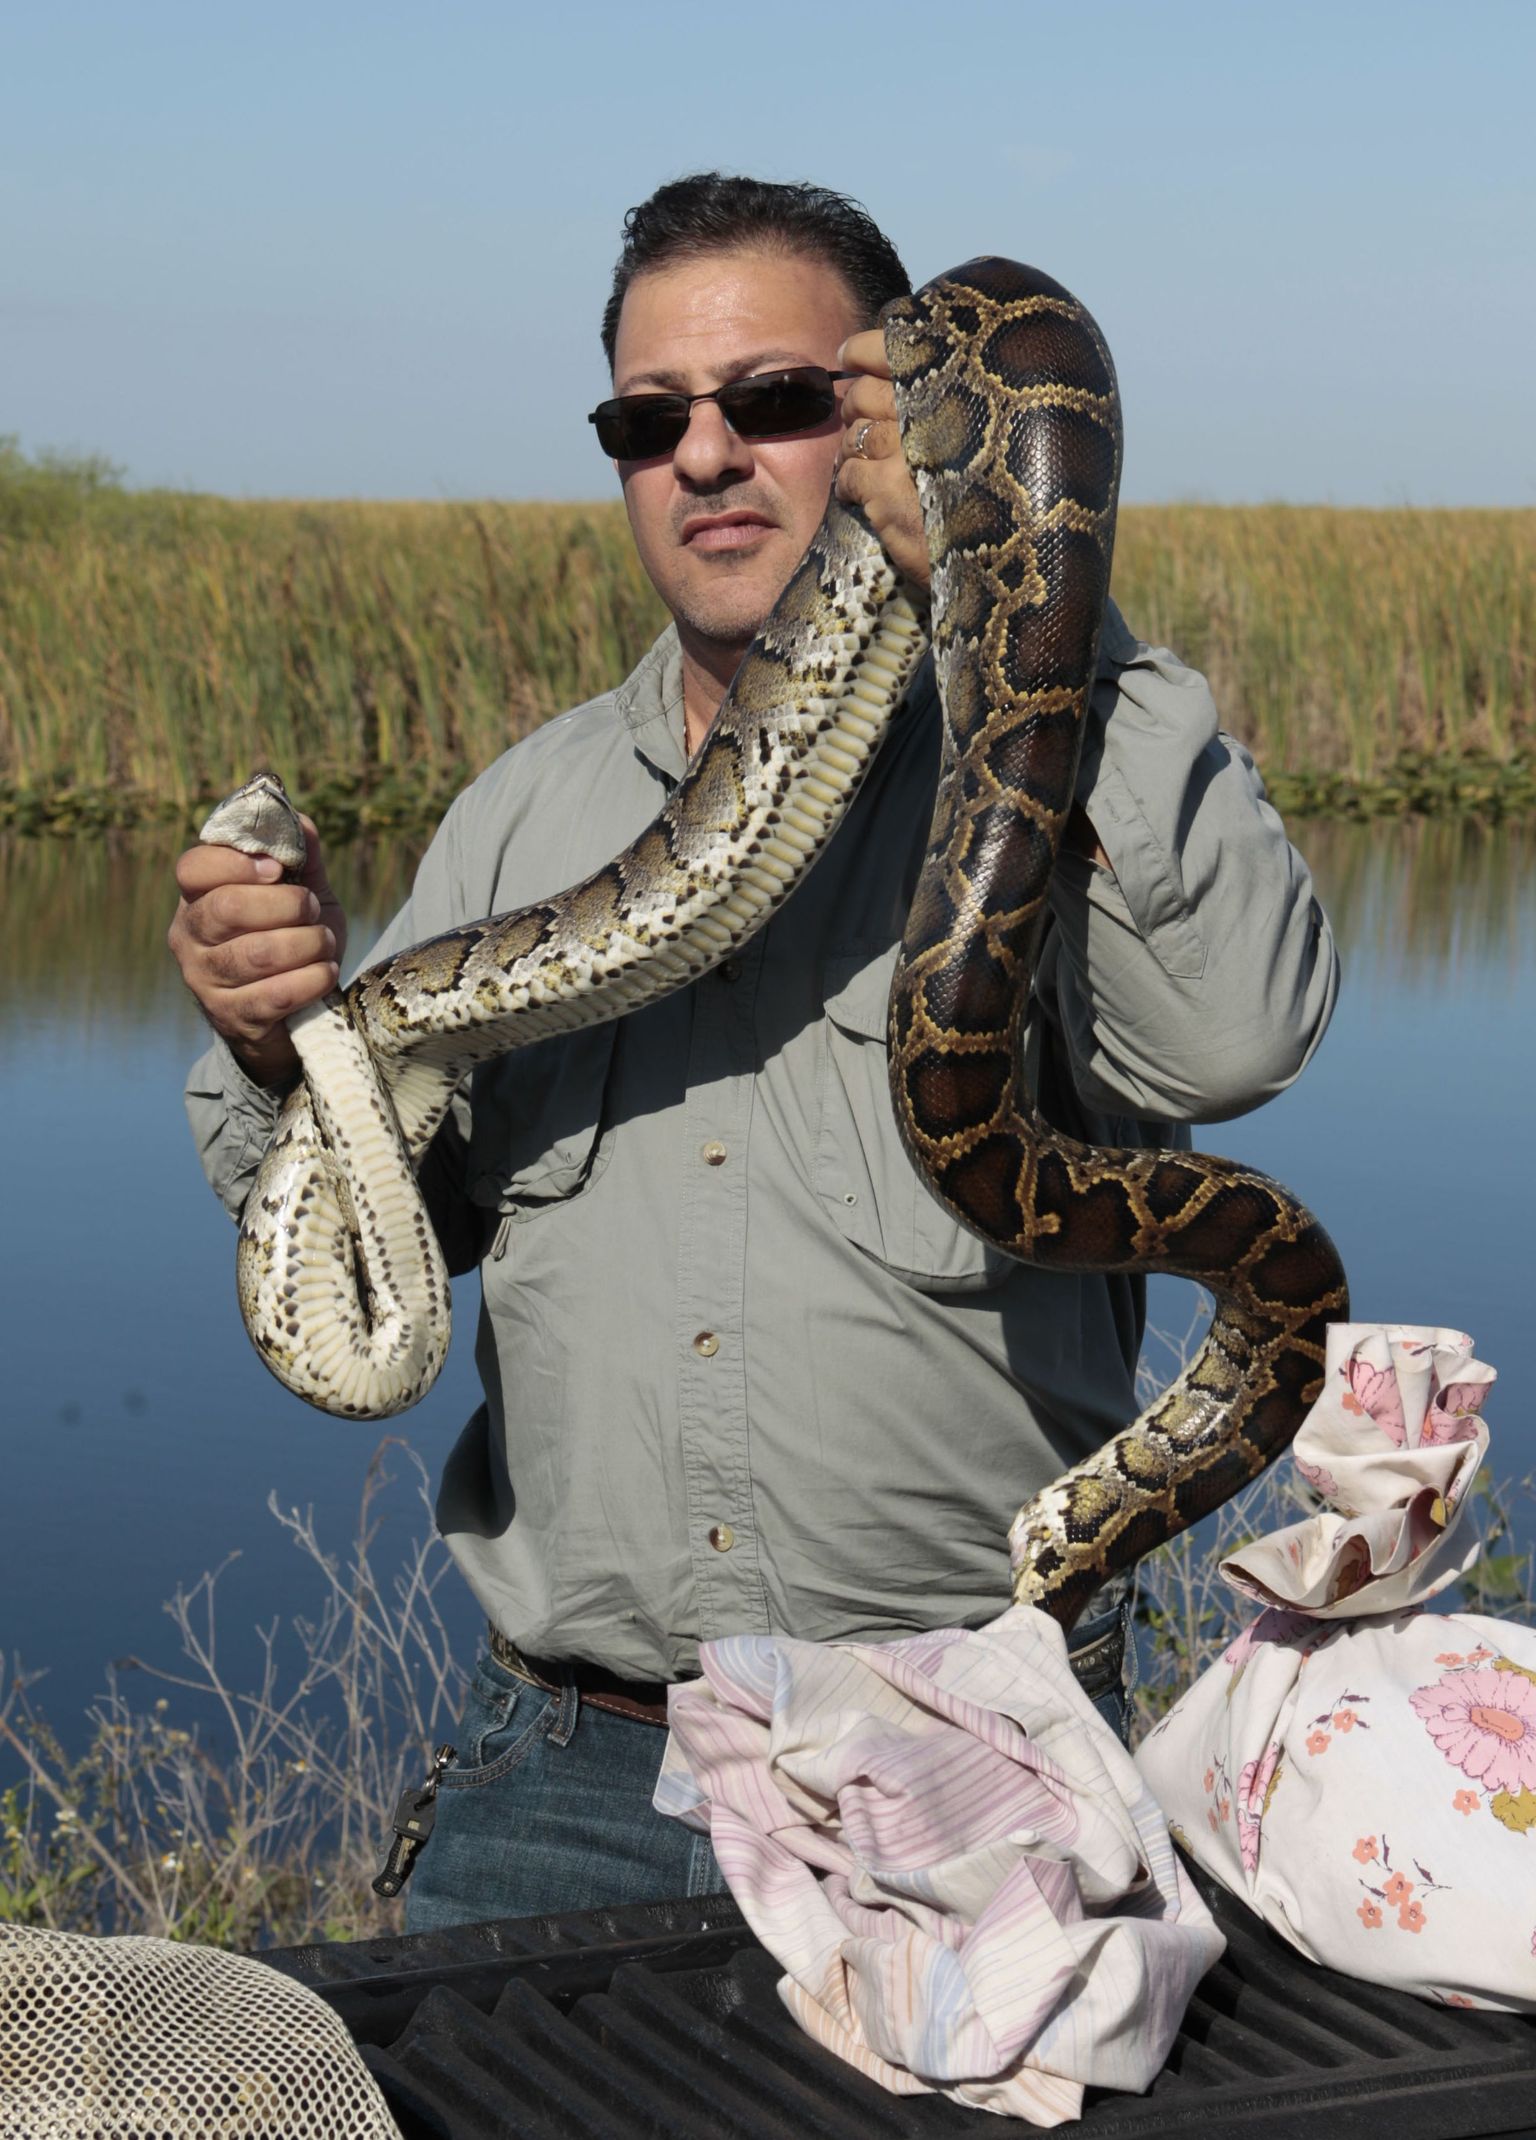 Evergladesi madude asjatundja Dave Leivman näitamas püütonit